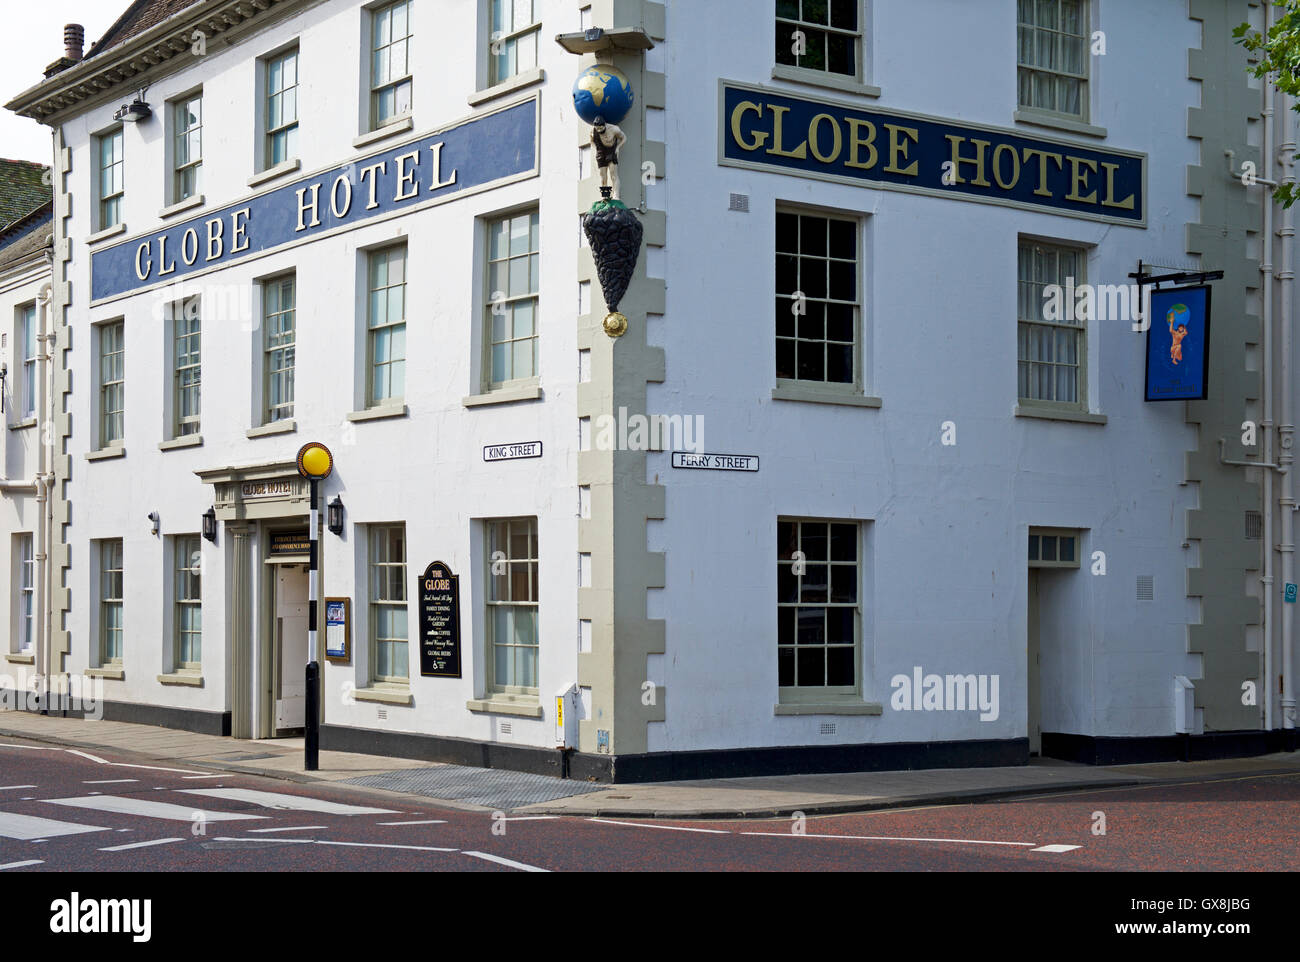 The Wetherspoons Globe Hotel, Kings Lynn, Norfolk, England UK Stock Photo